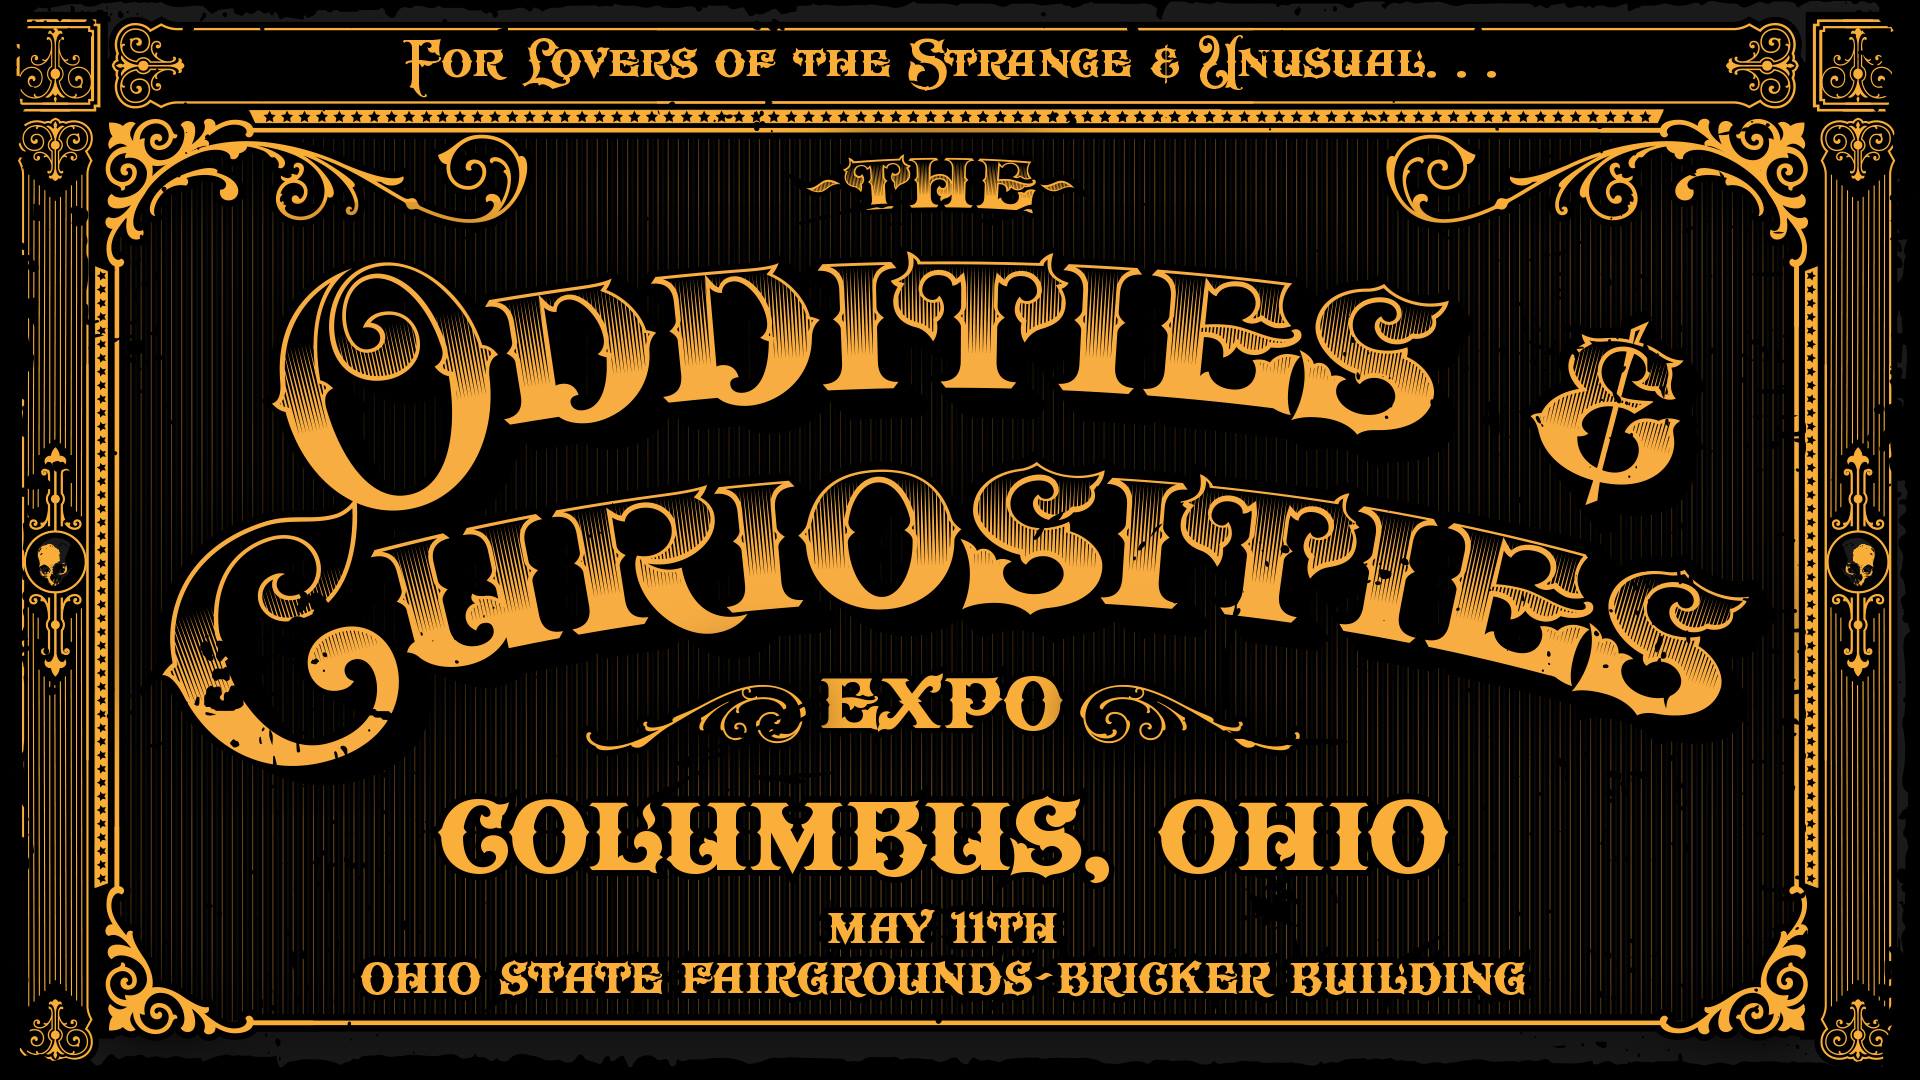 dallas oddities and curiosities expo